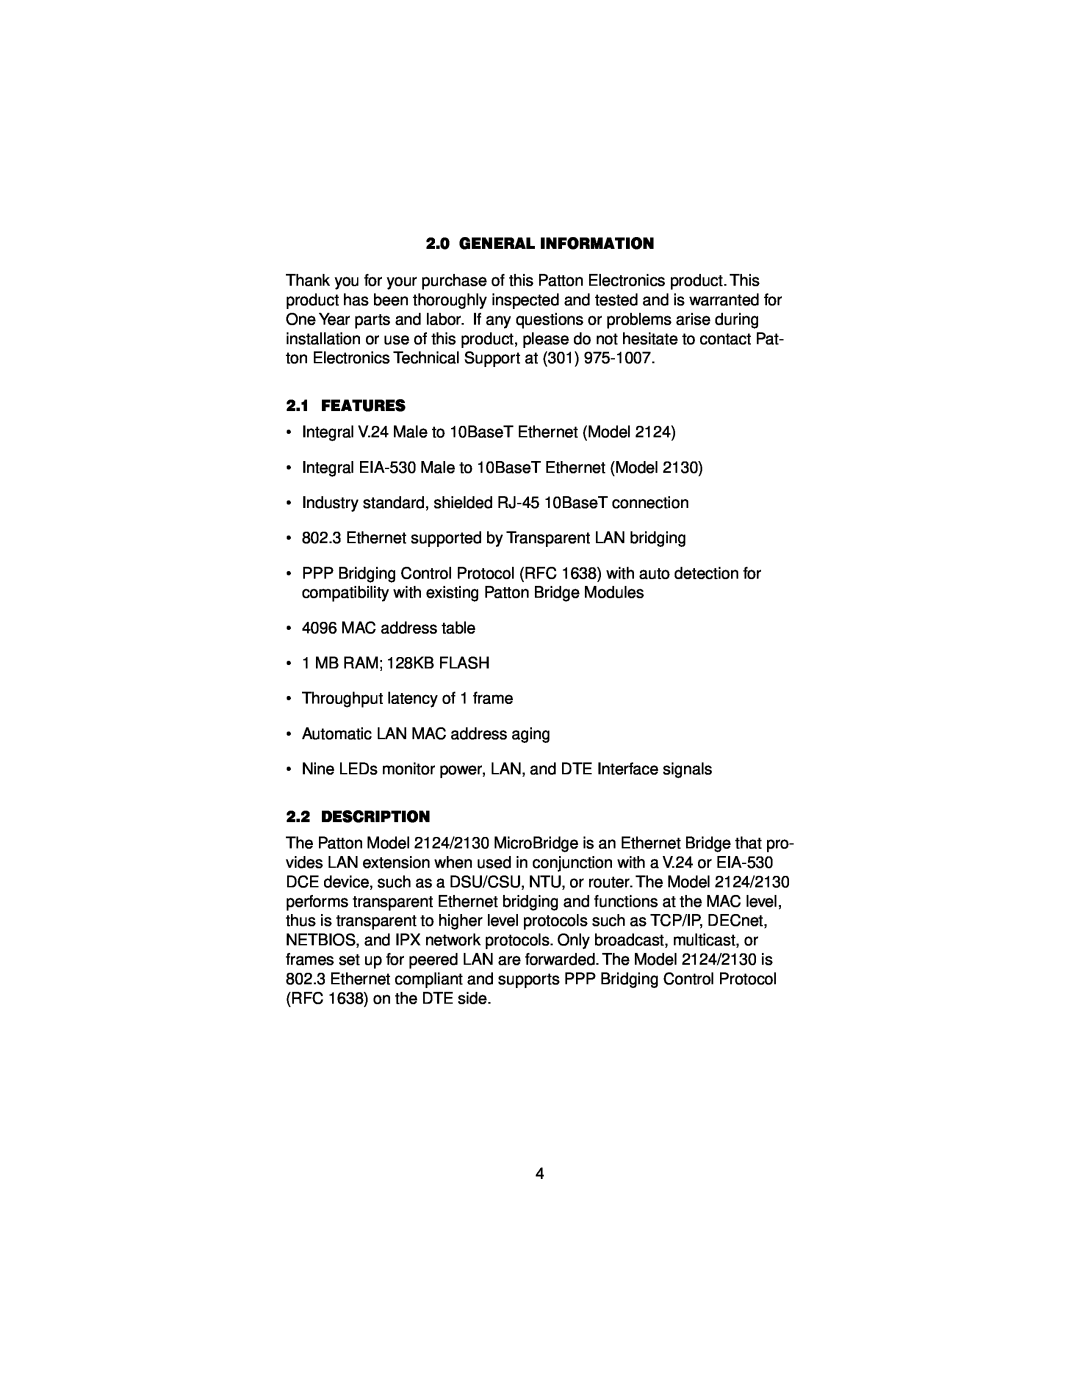 Patton electronic 2130, 2124 user manual General Information, Features, Description 